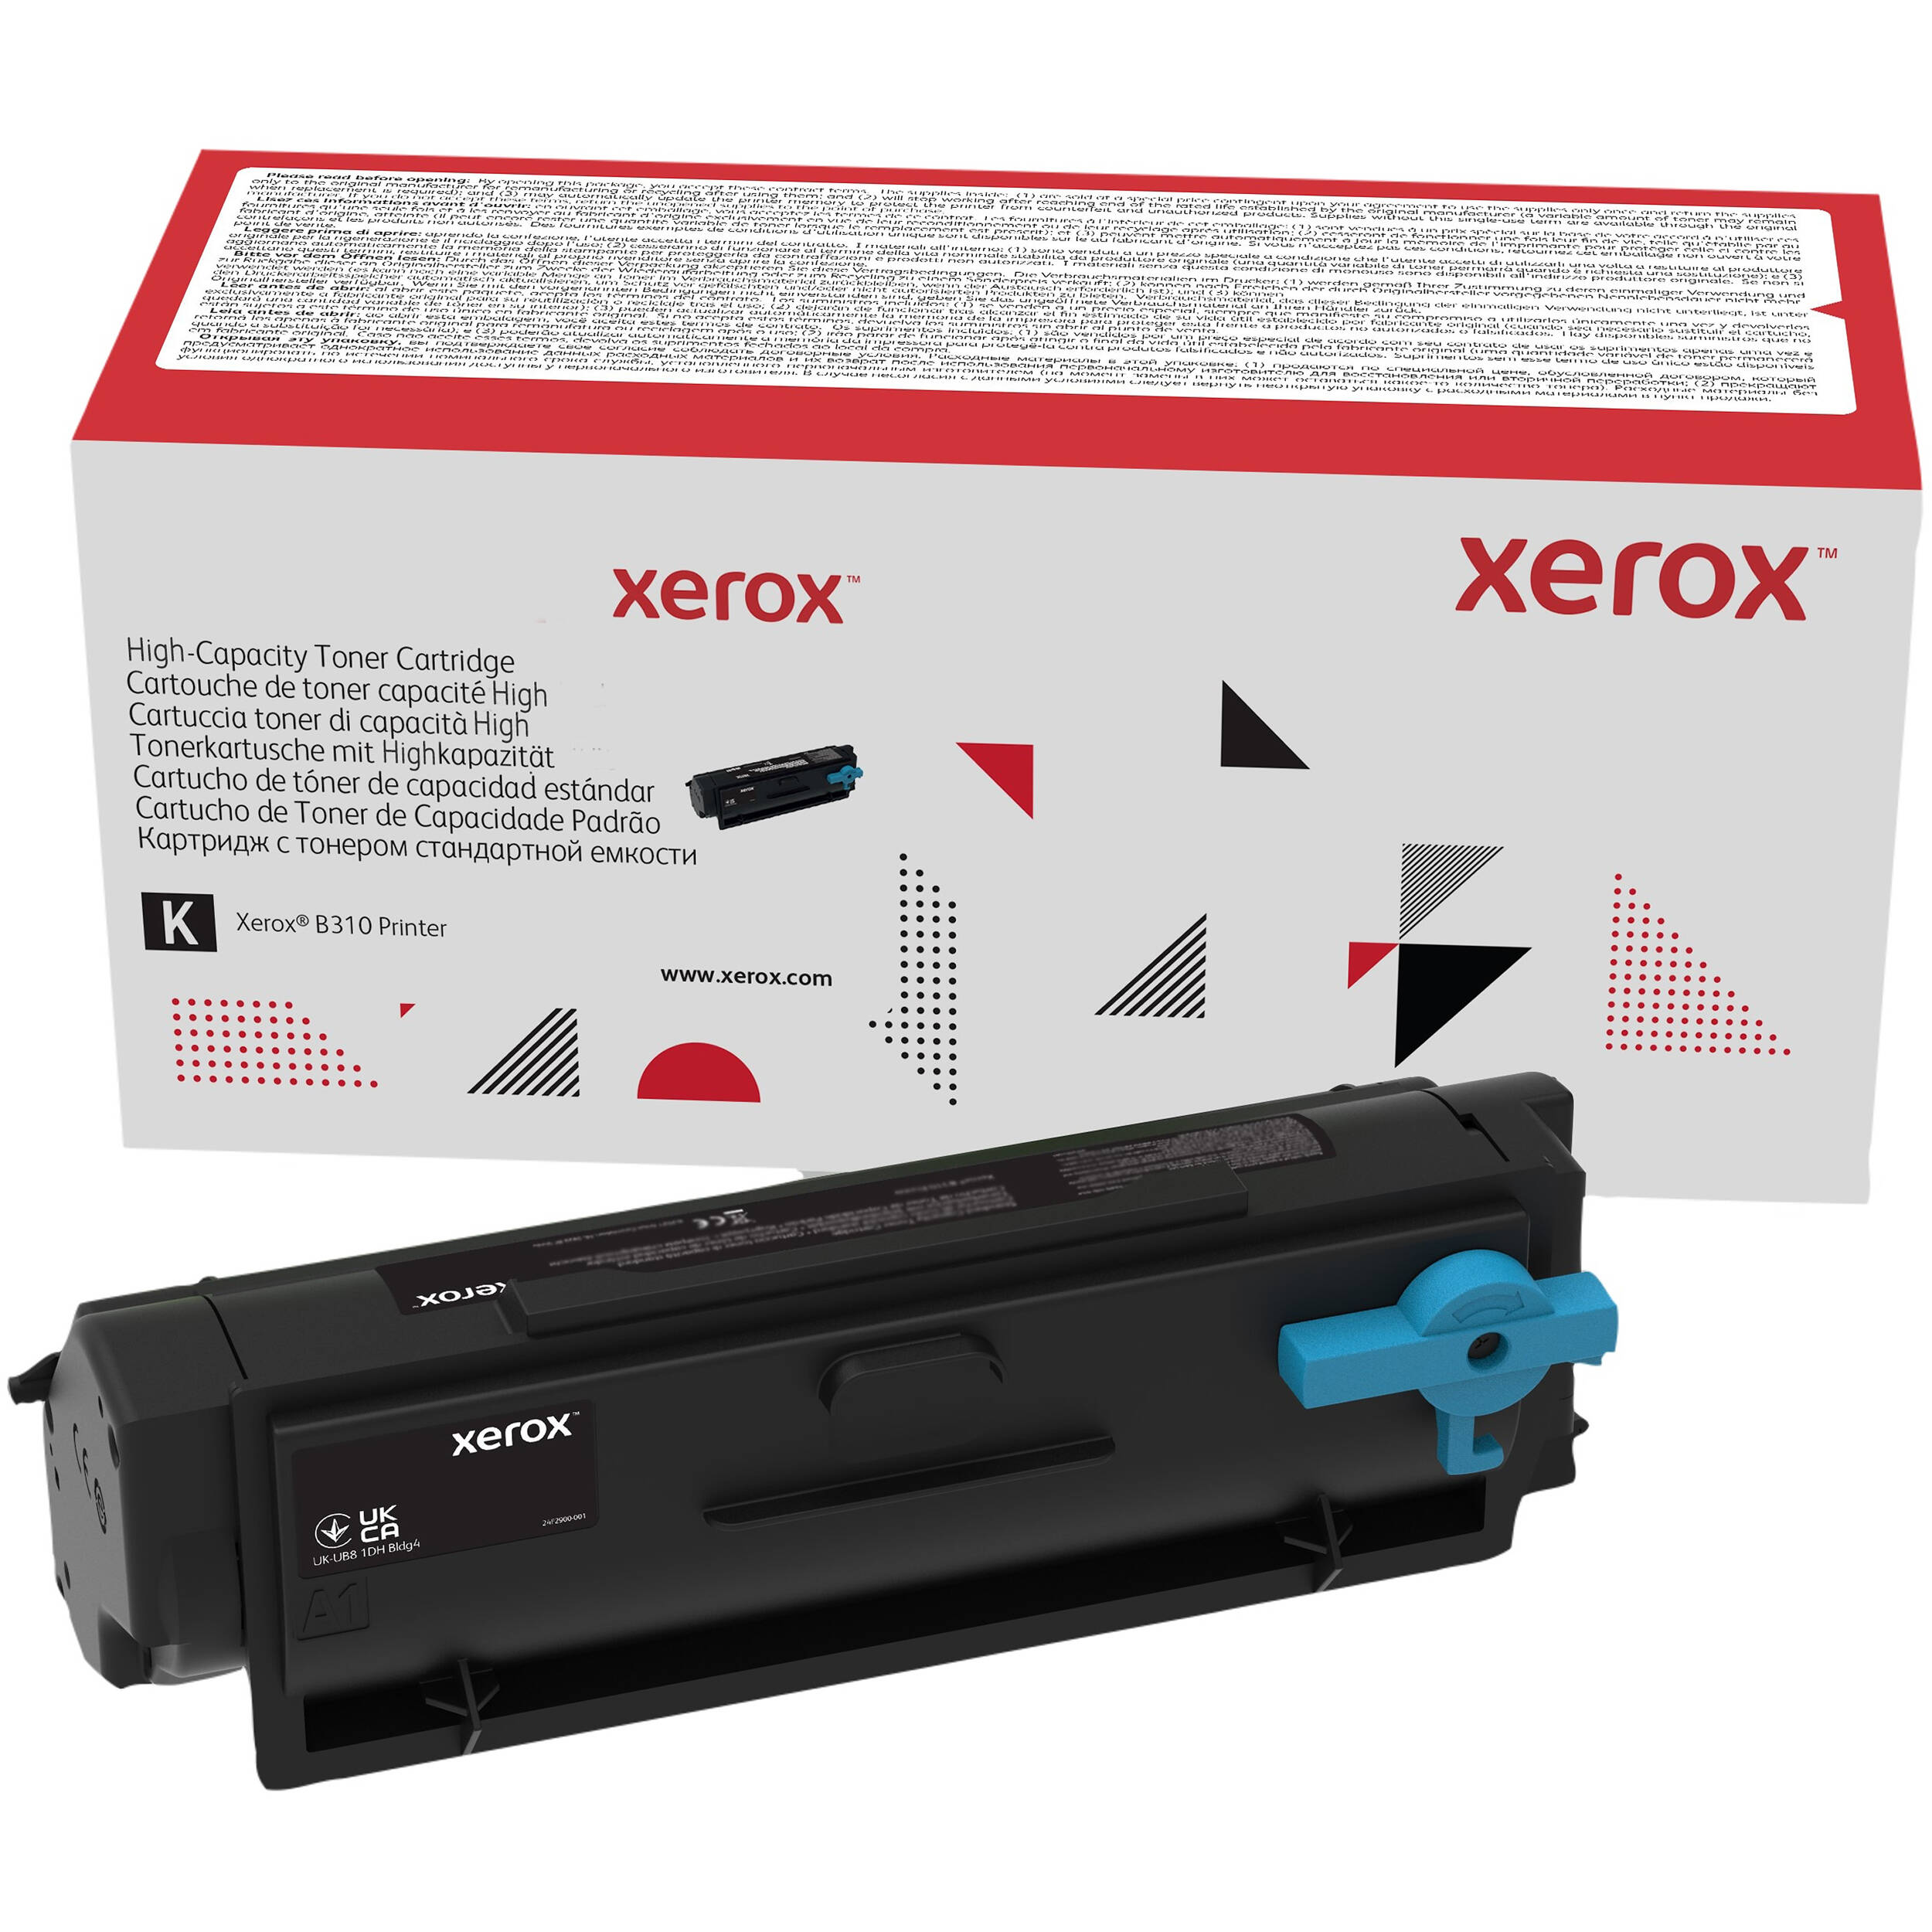 Absolute Toner Genuine Xerox 006R04377 Black High Yield Toner Cartridge (8,000 pages) Original Xerox Cartridges